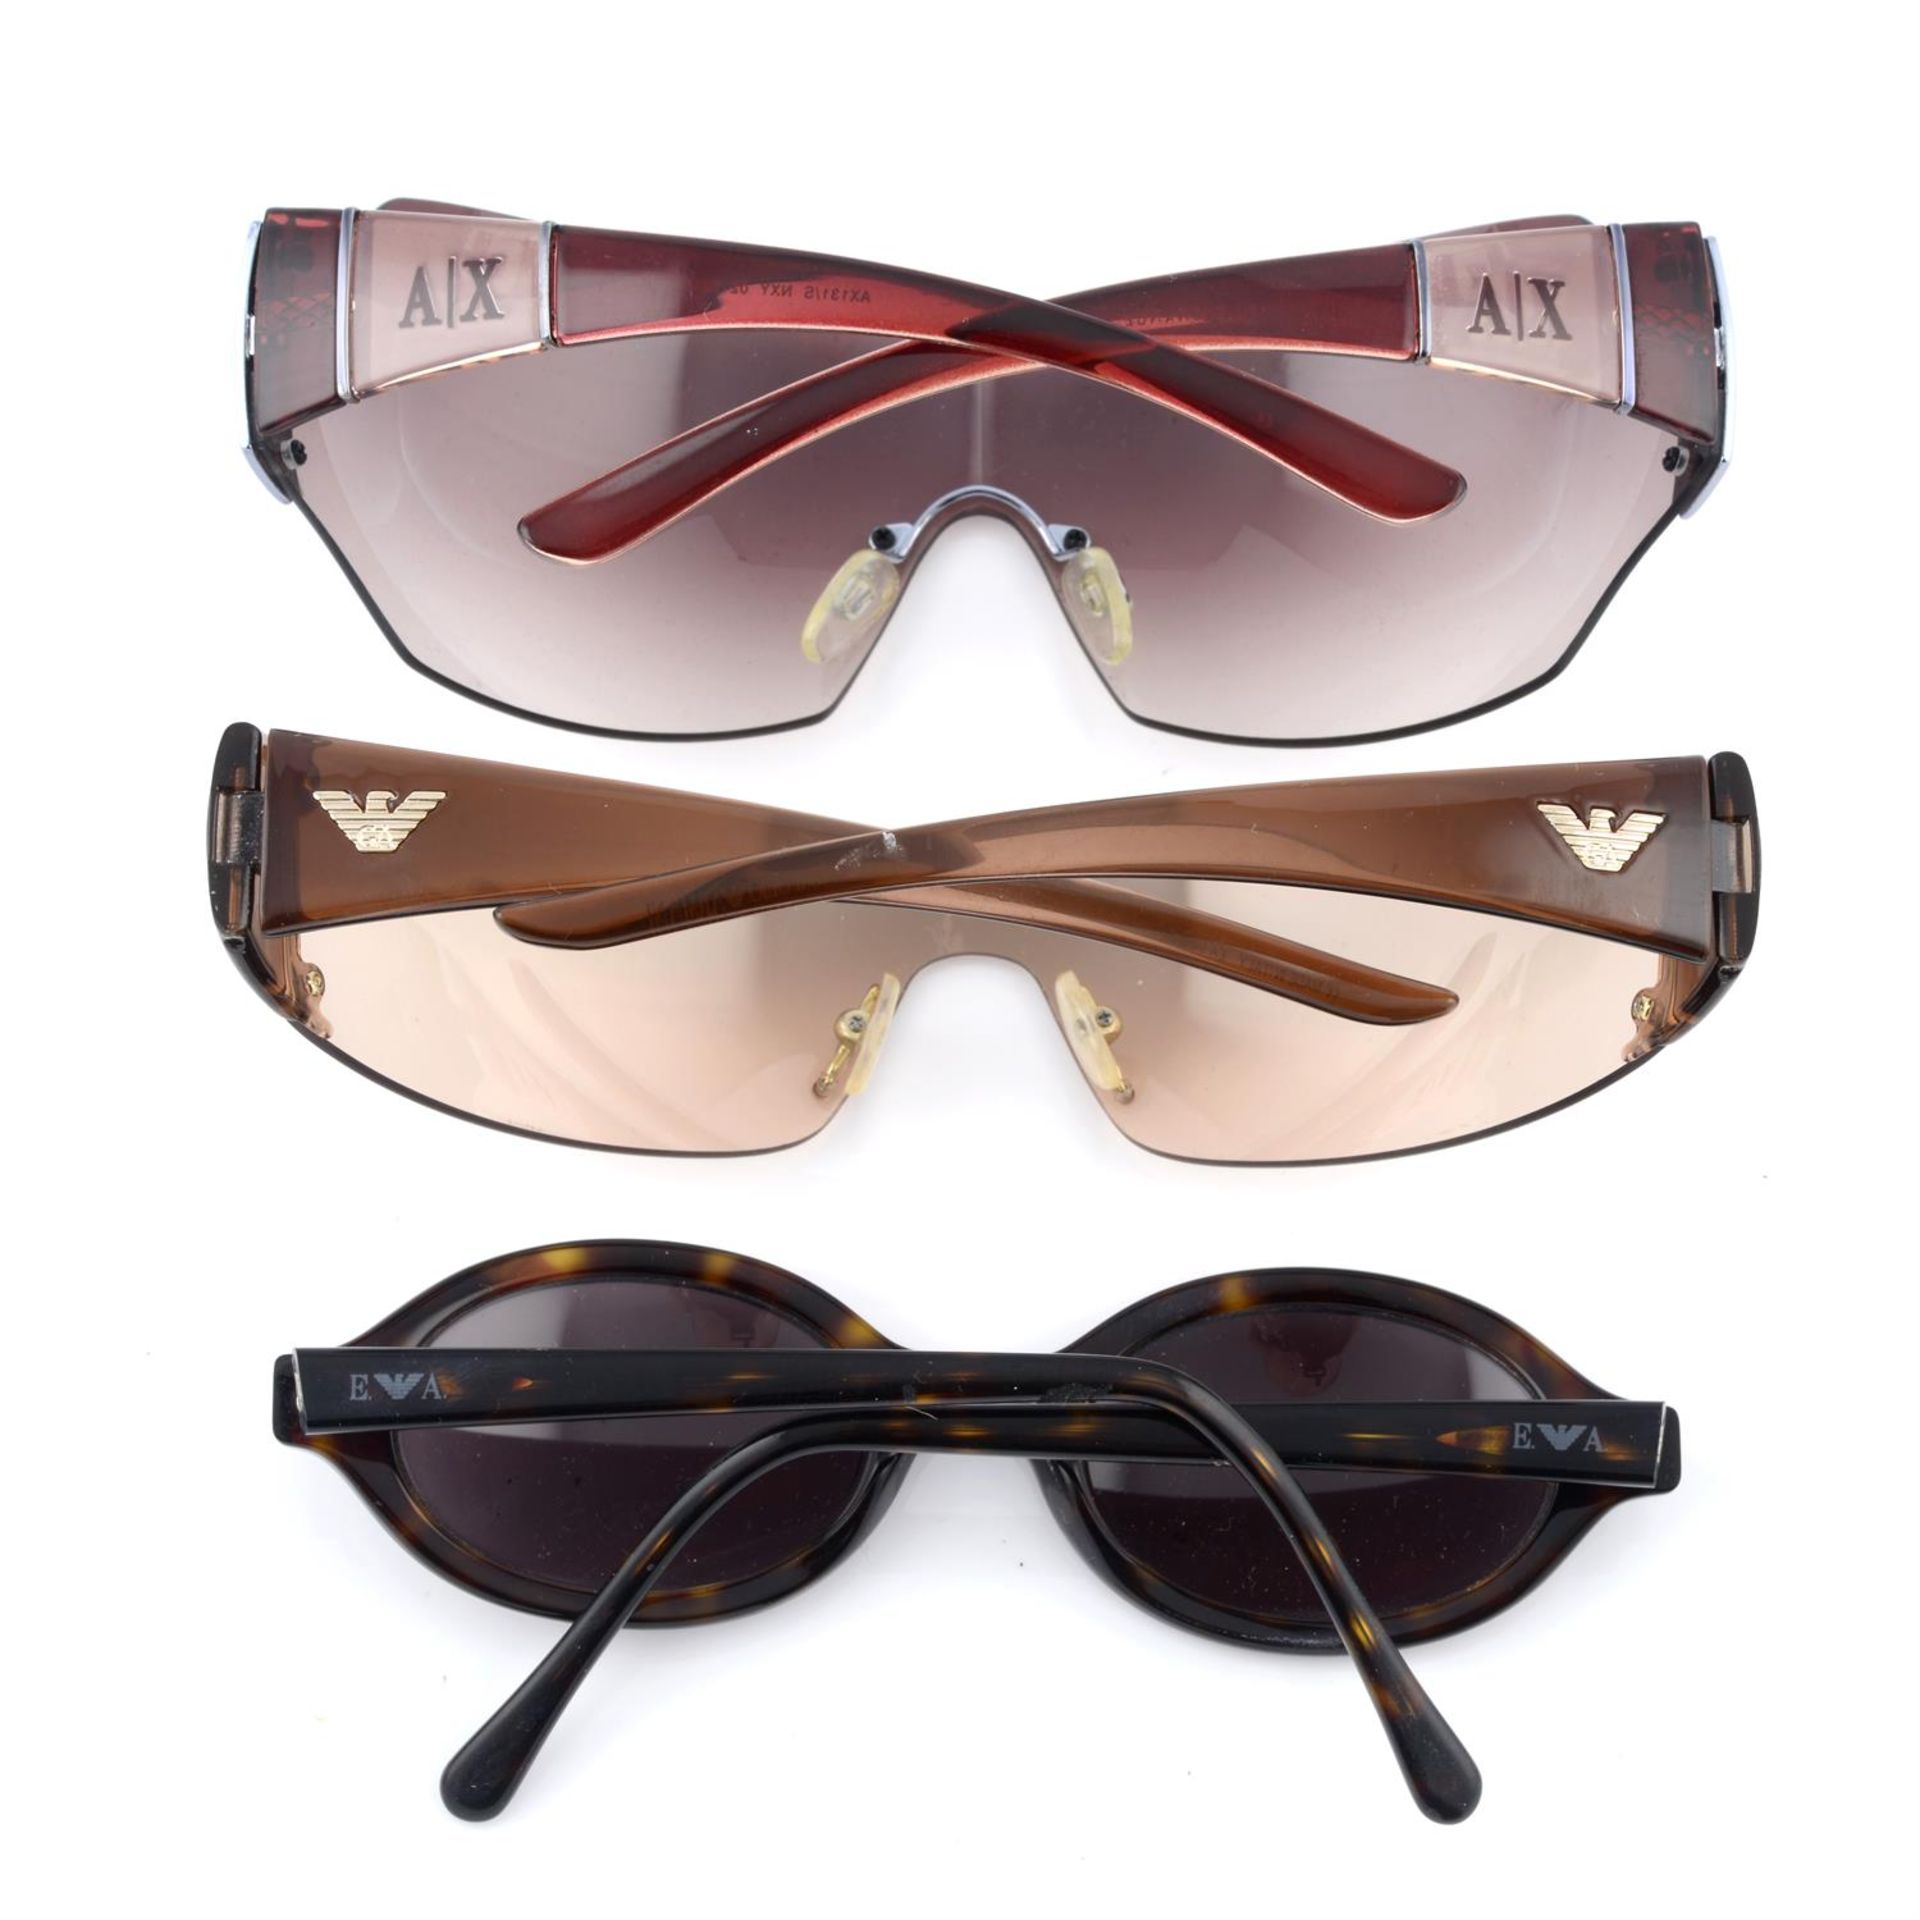 ARMANI - three pairs of sunglasses. - Image 2 of 3